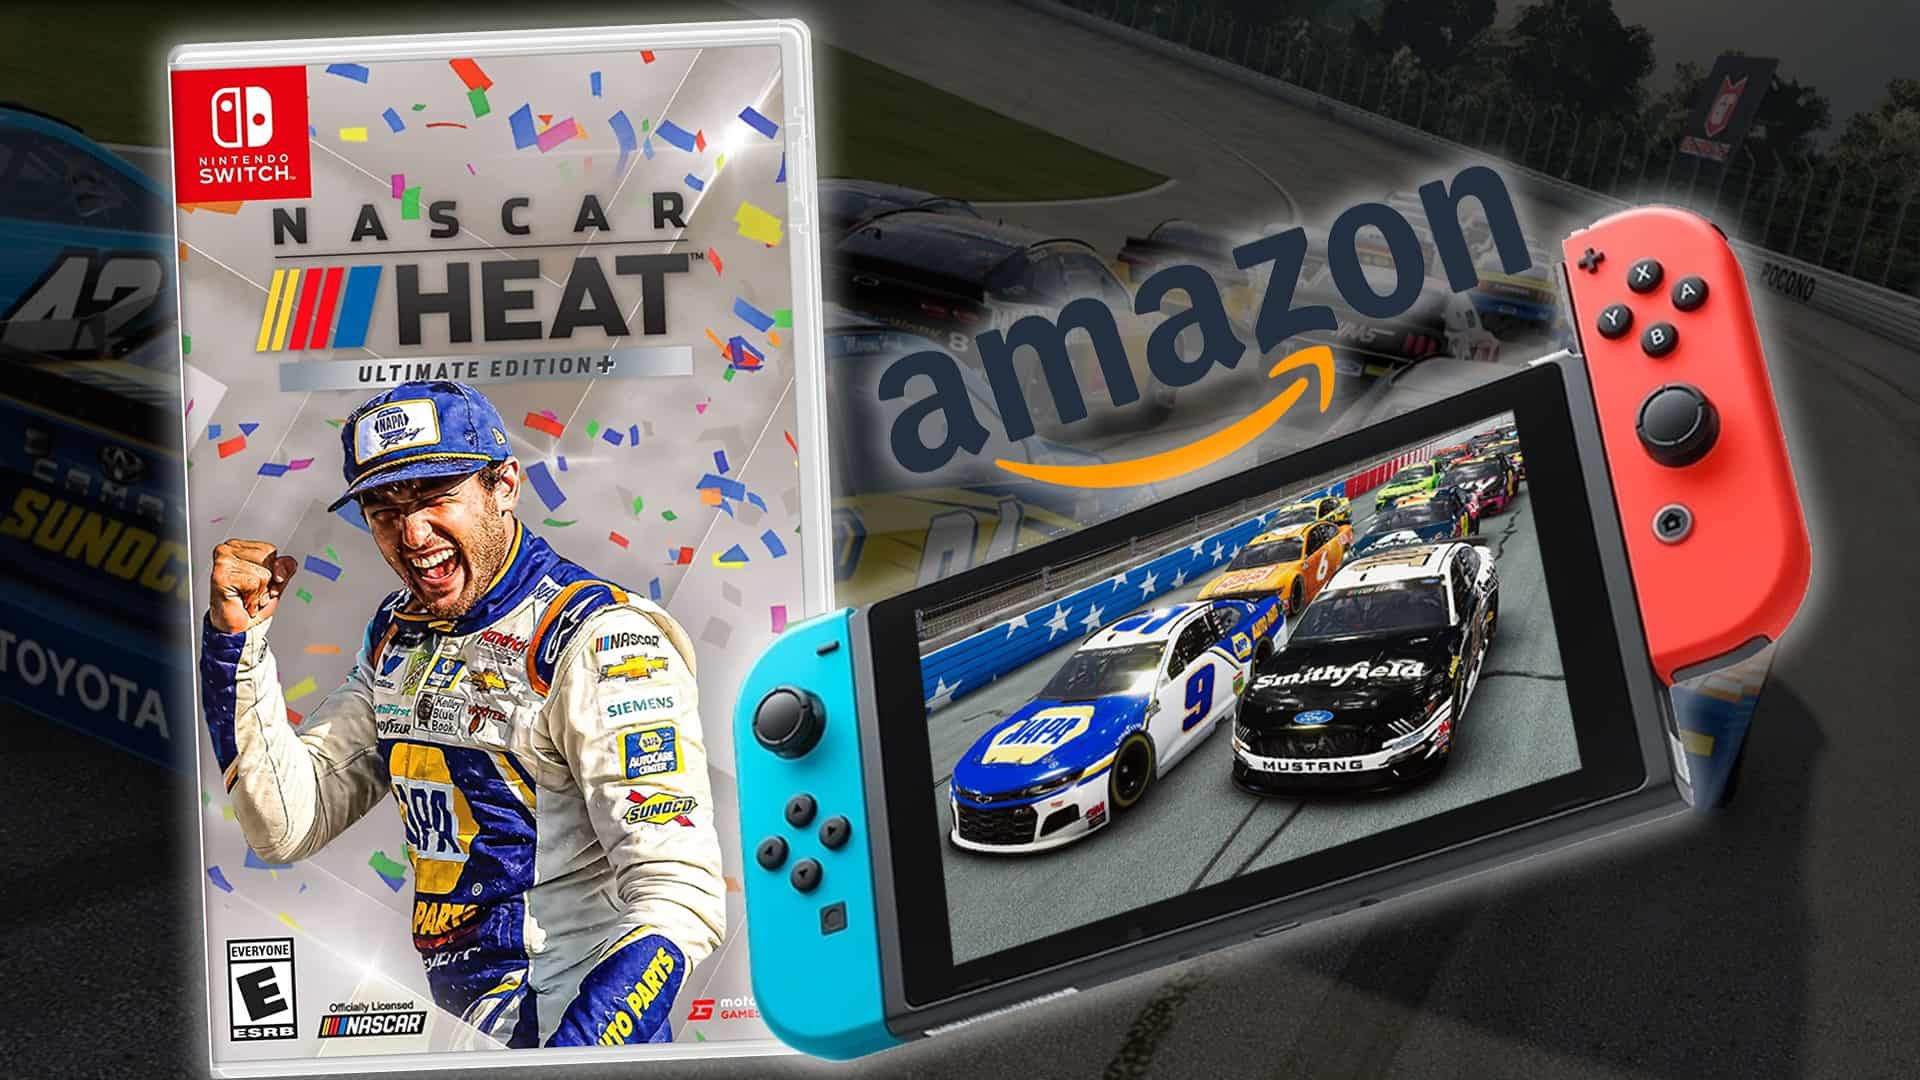 impactante diversión Rebobinar NASCAR Heat Ultimate Edition+ on Nintendo Switch found via Amazon listing |  Traxion